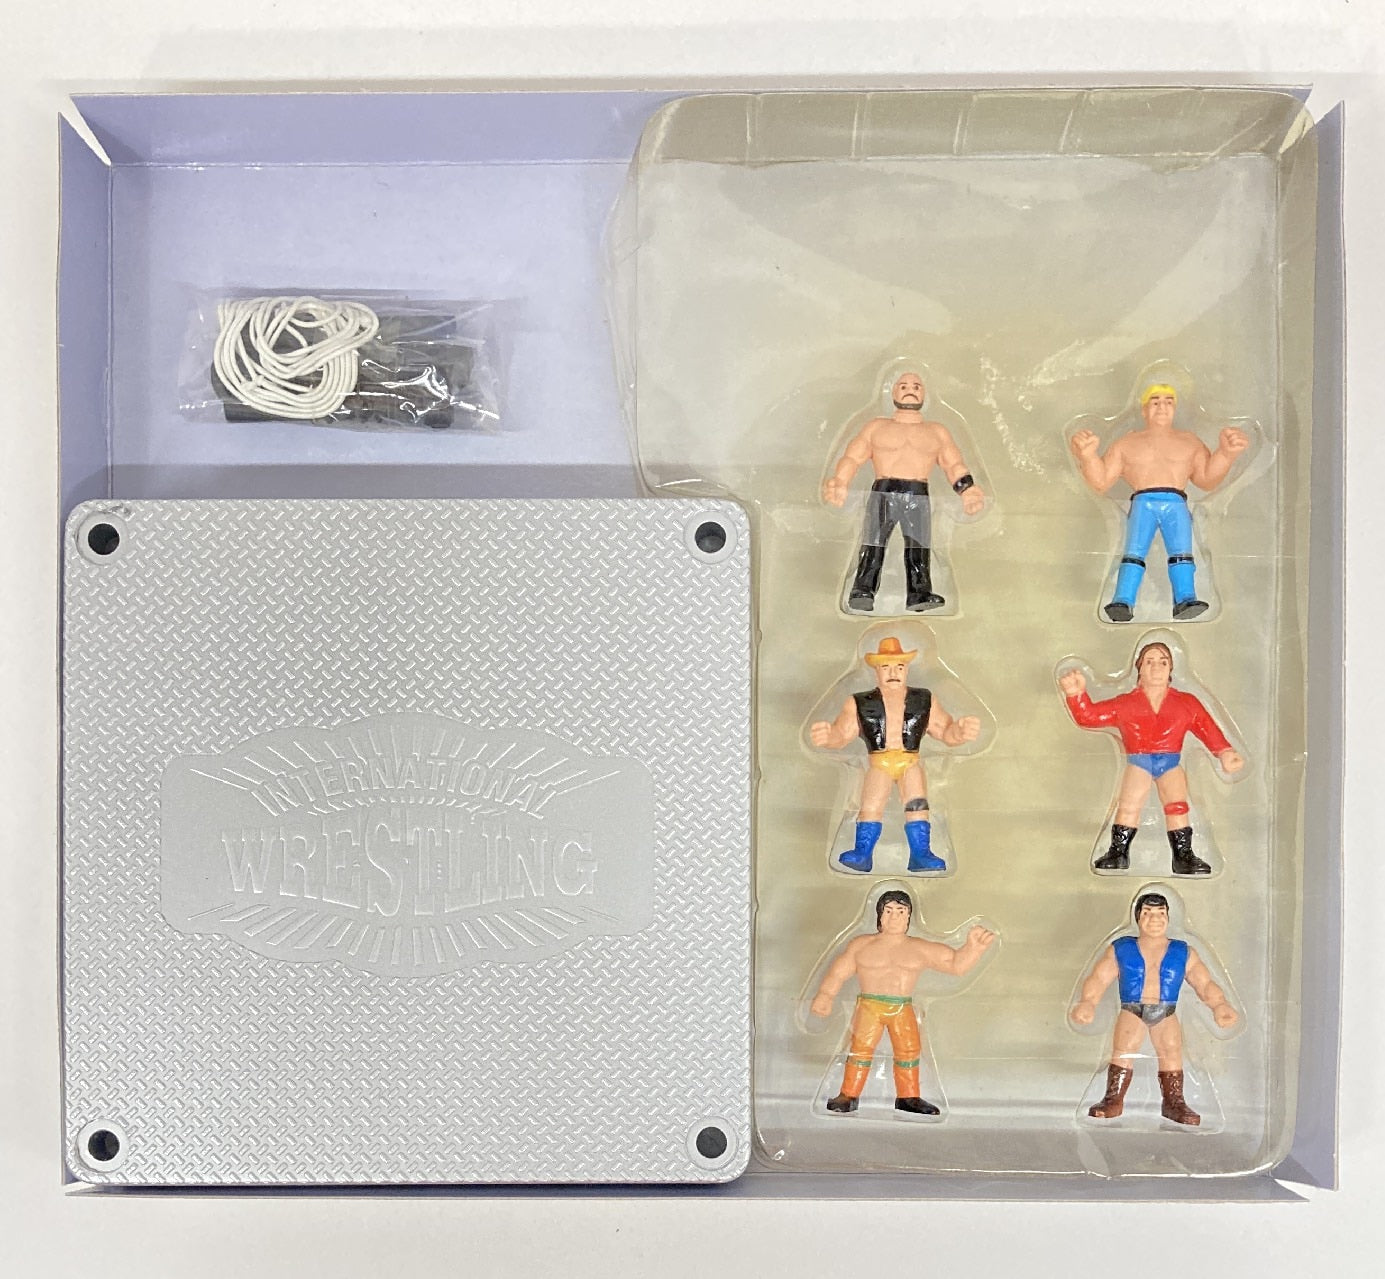 1999 Hinstar International Wrestling Bootleg/Knockoff Mini Figures 6-Pack with Ring